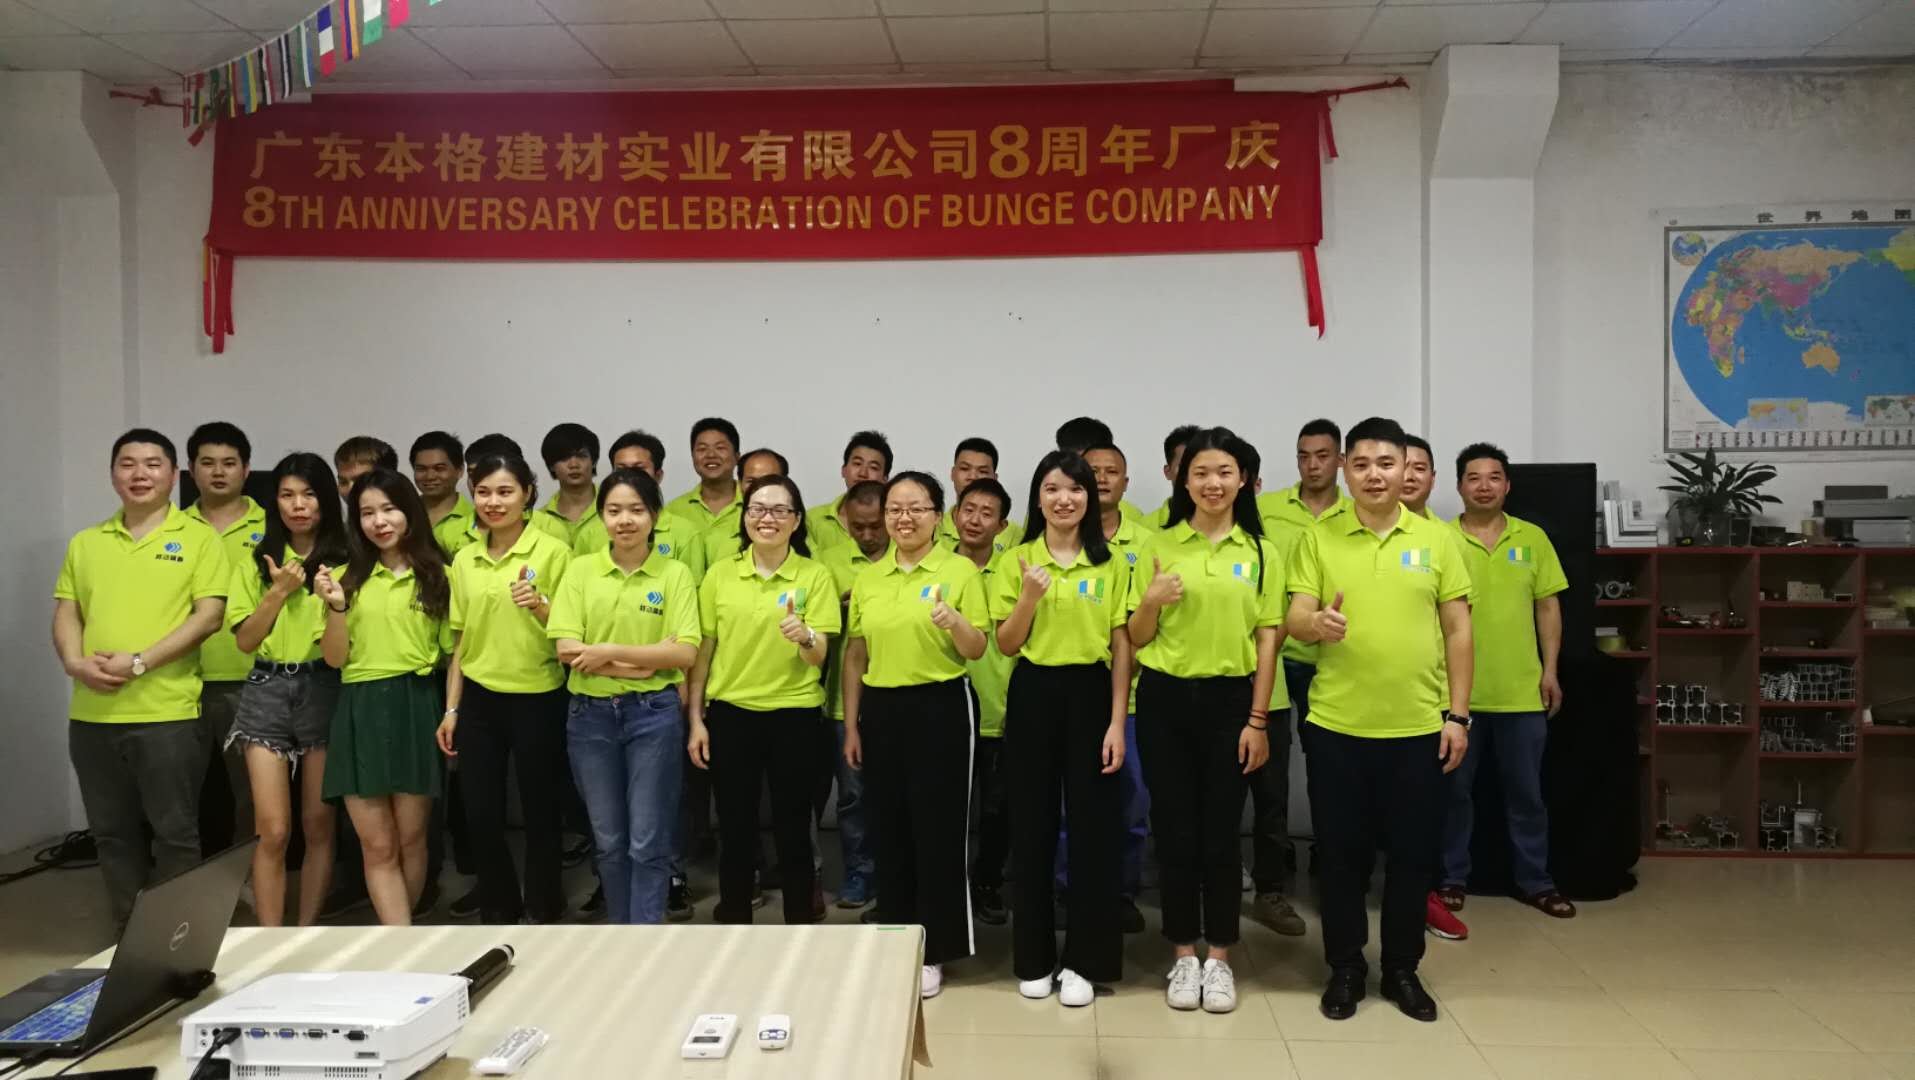 China Guangdong Bunge Building Material Industrial Co., Ltd Bedrijfsprofiel